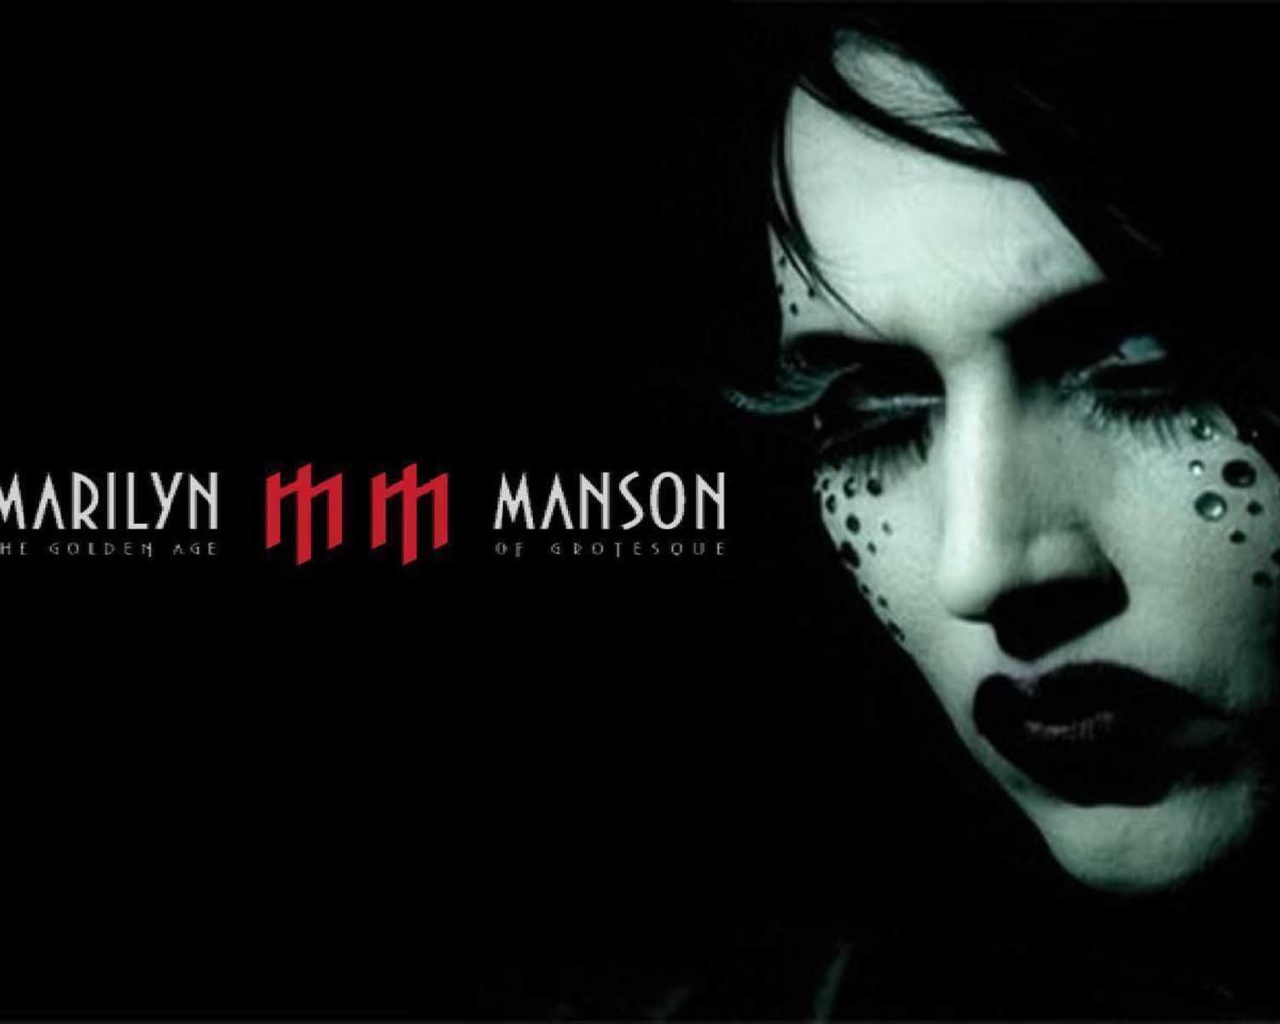 Marilyn Manson The Golden Age